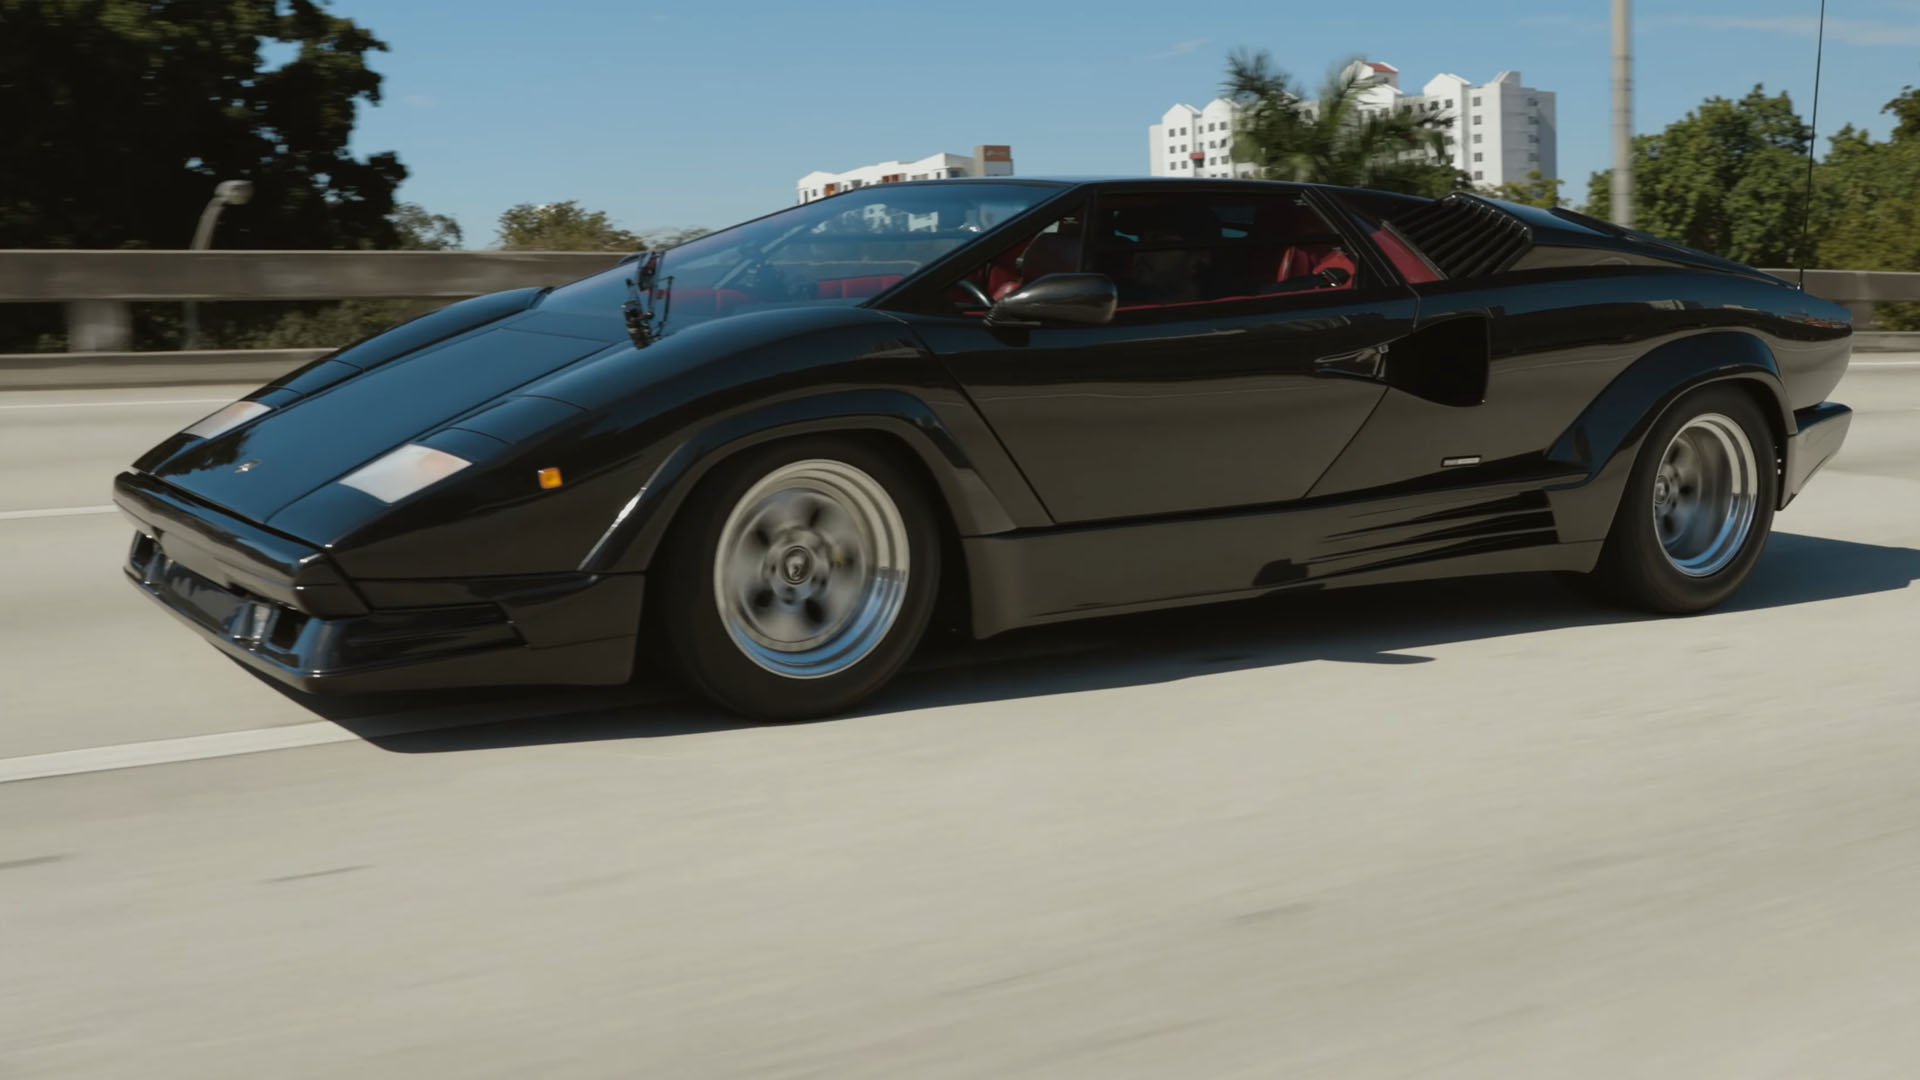 Why the Lamborghini Countach 25th Anniversary was so important